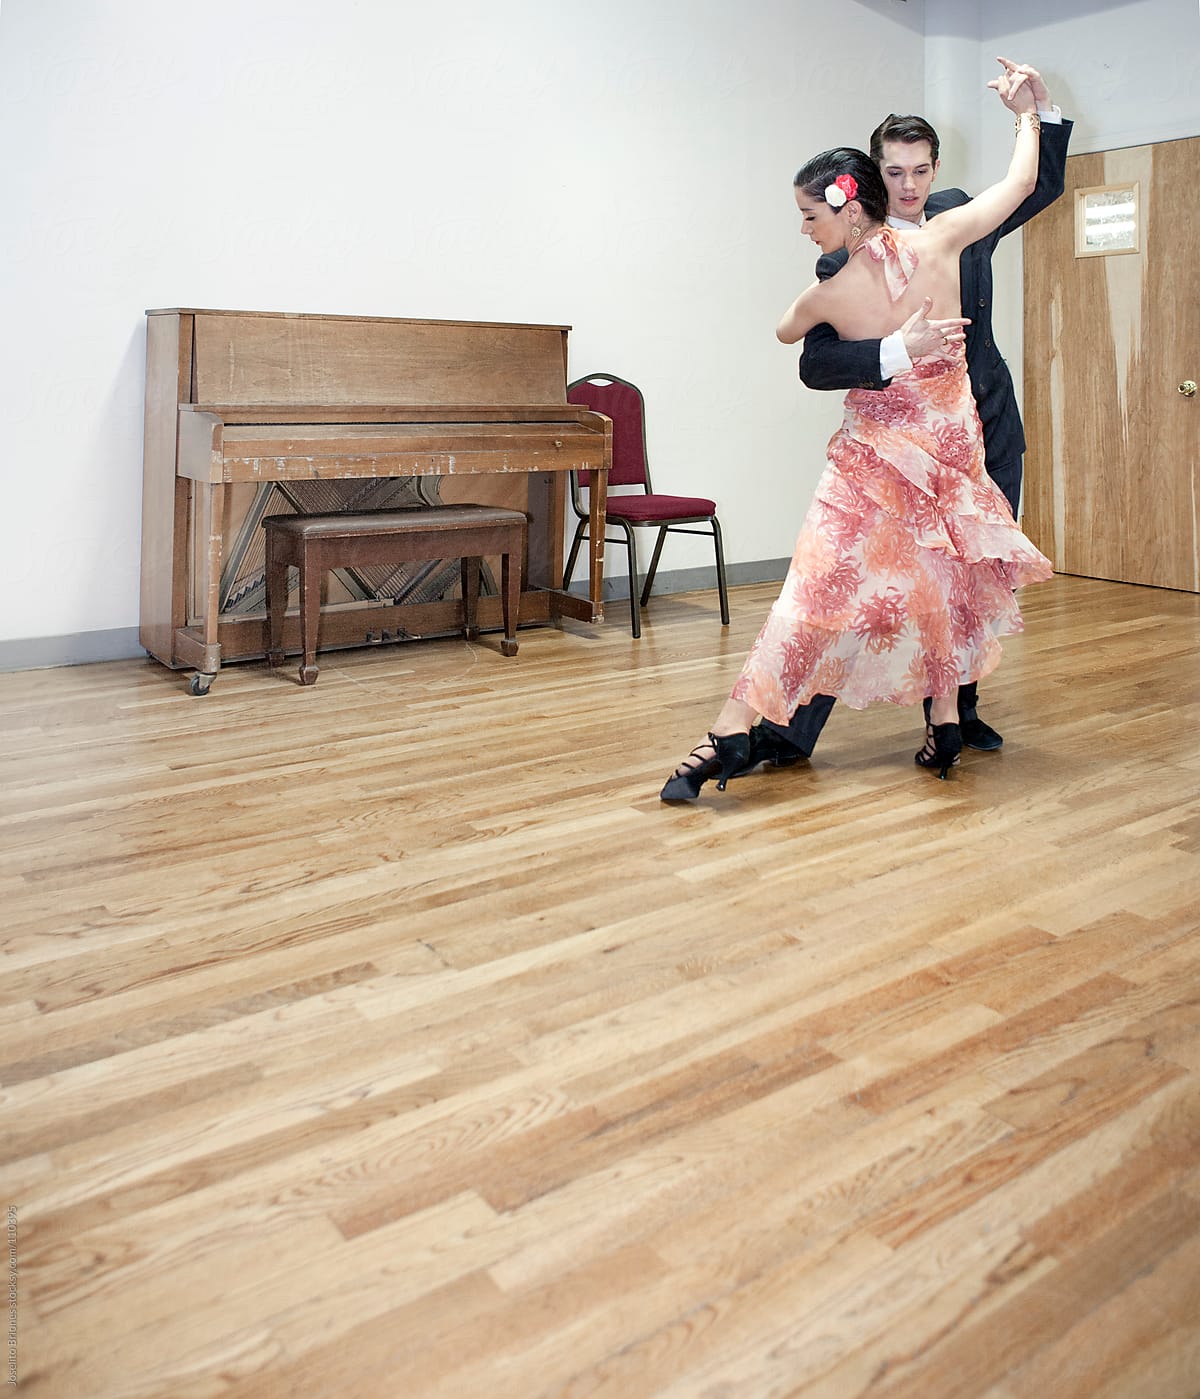 Tango Lessons in a Dance Studio